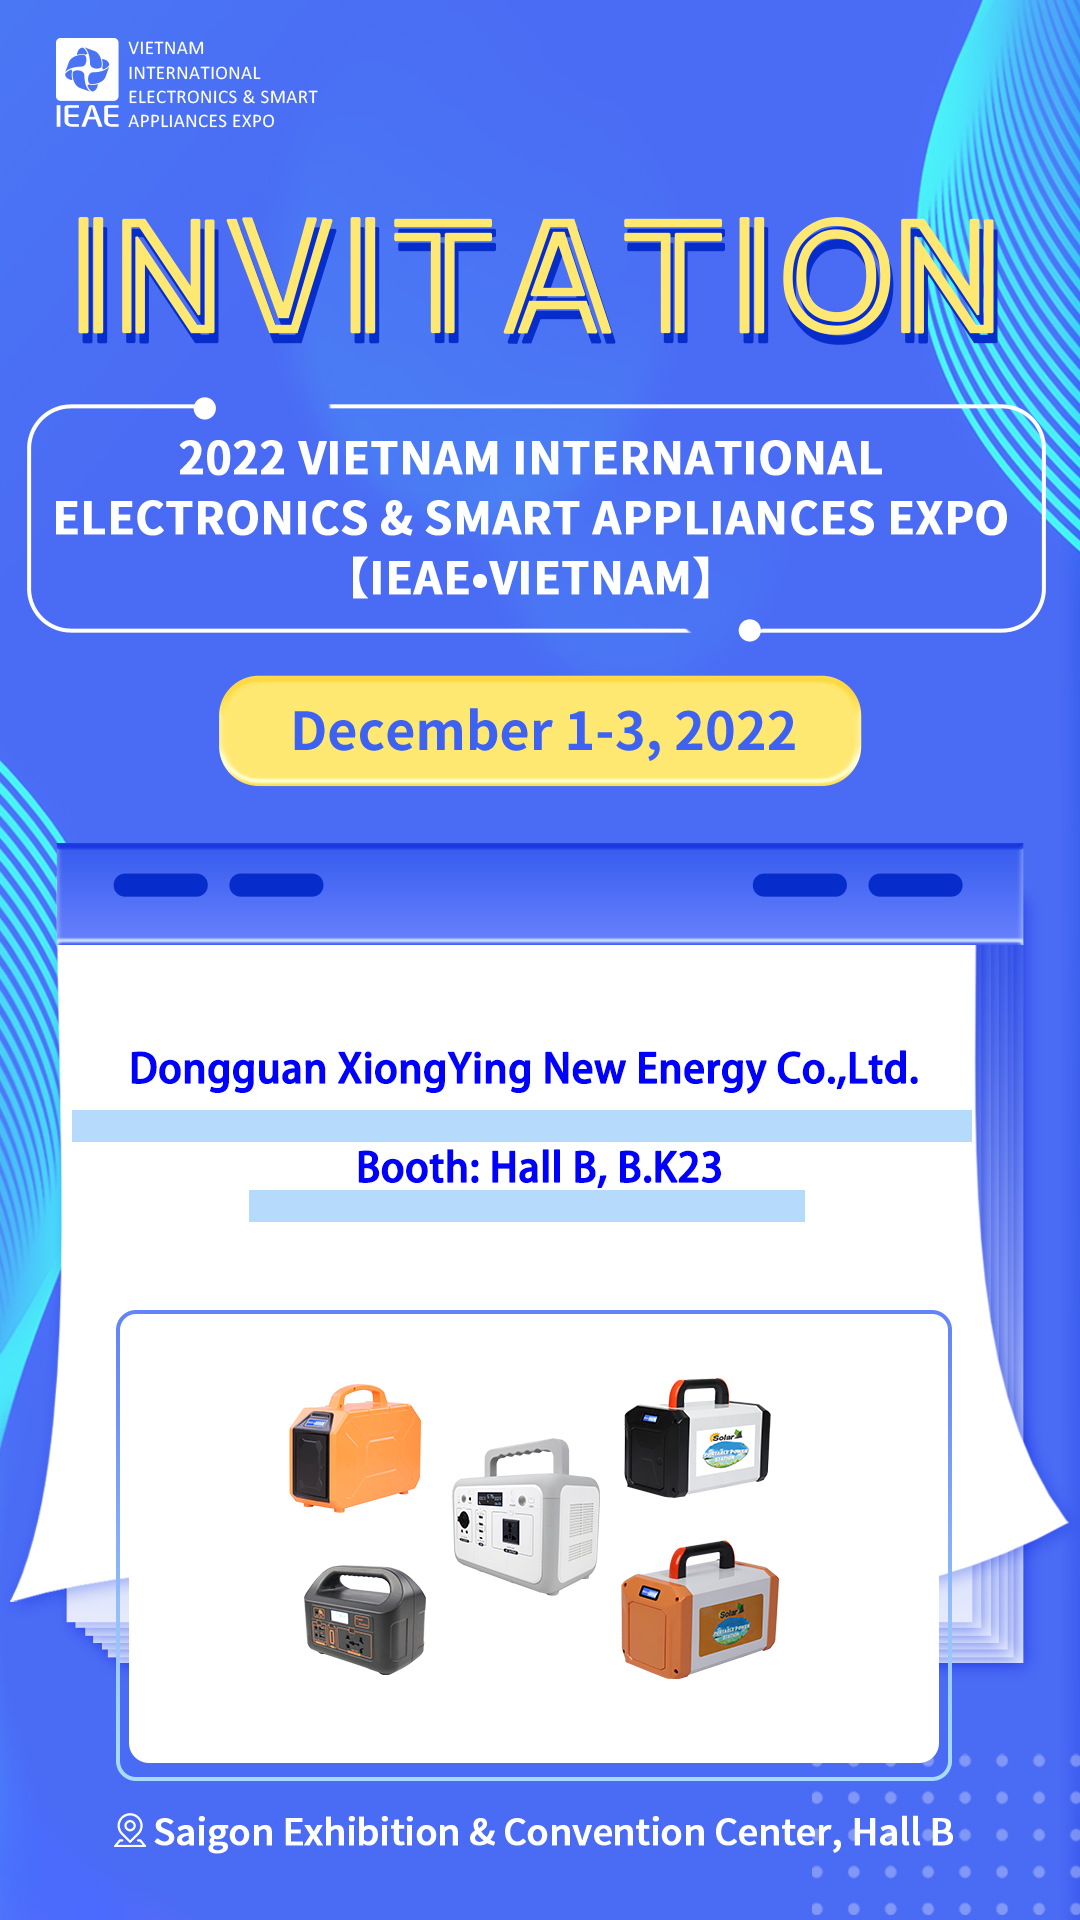 Vietnam International Electronics & Smart Appliances Expo